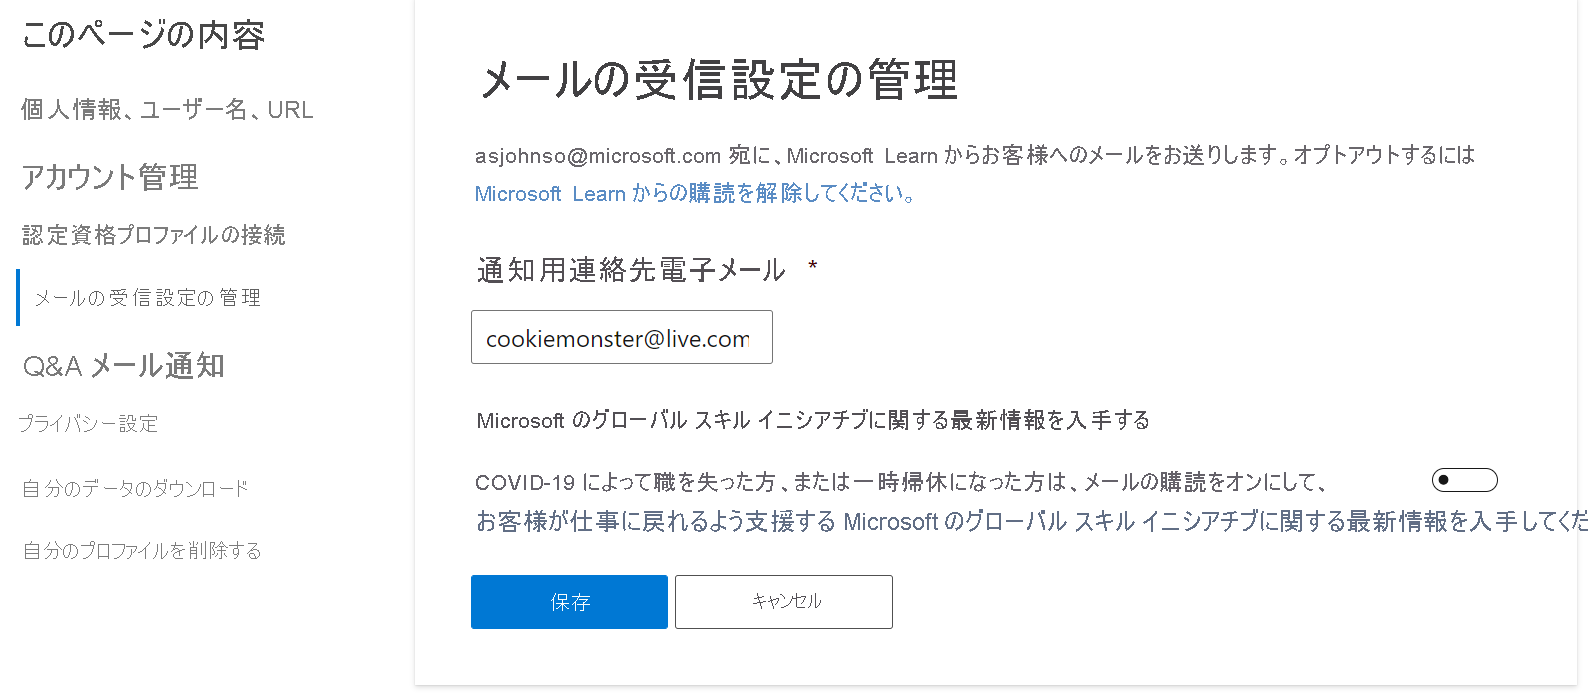 Microsoft Learn プロファイル設定の [メール設定の管理] セクションのスクリーンショット。